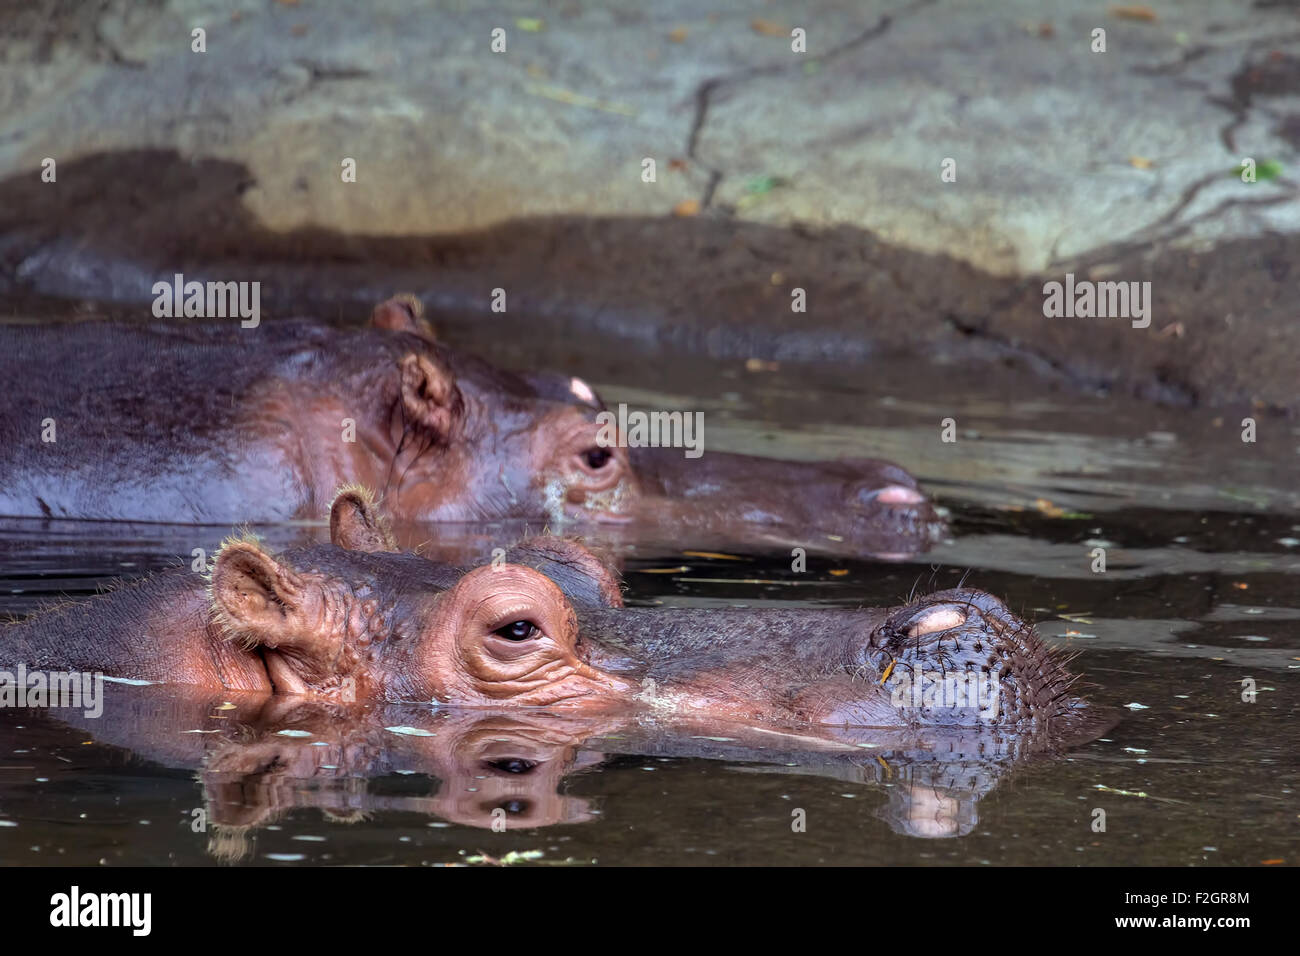 Hippopotamus Pair Submerged in Water Closeup Portrait Stock Photo